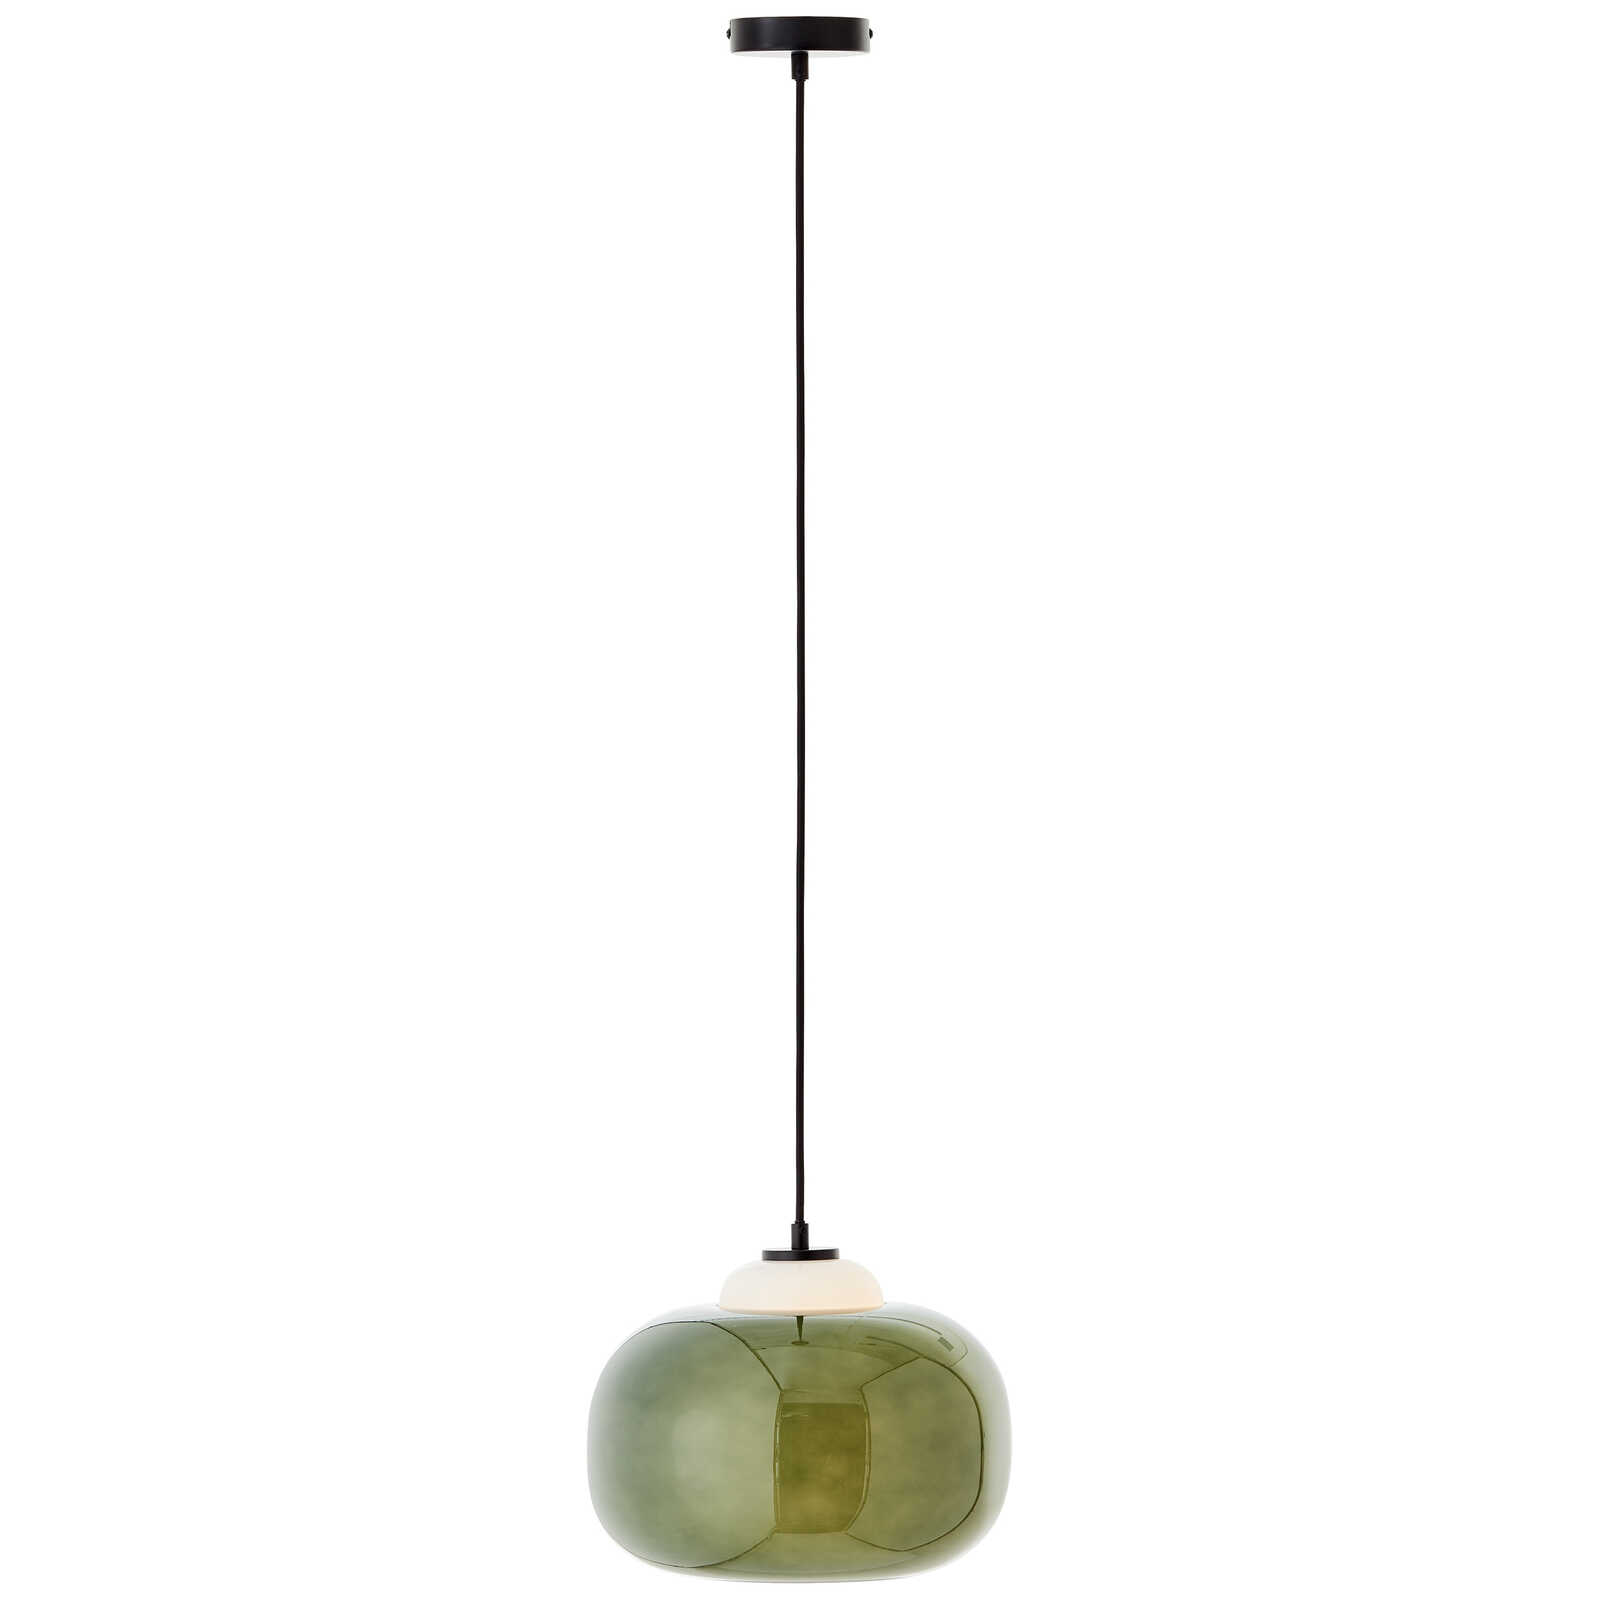             Glazen hanglamp - Carla 3 - Groen
        